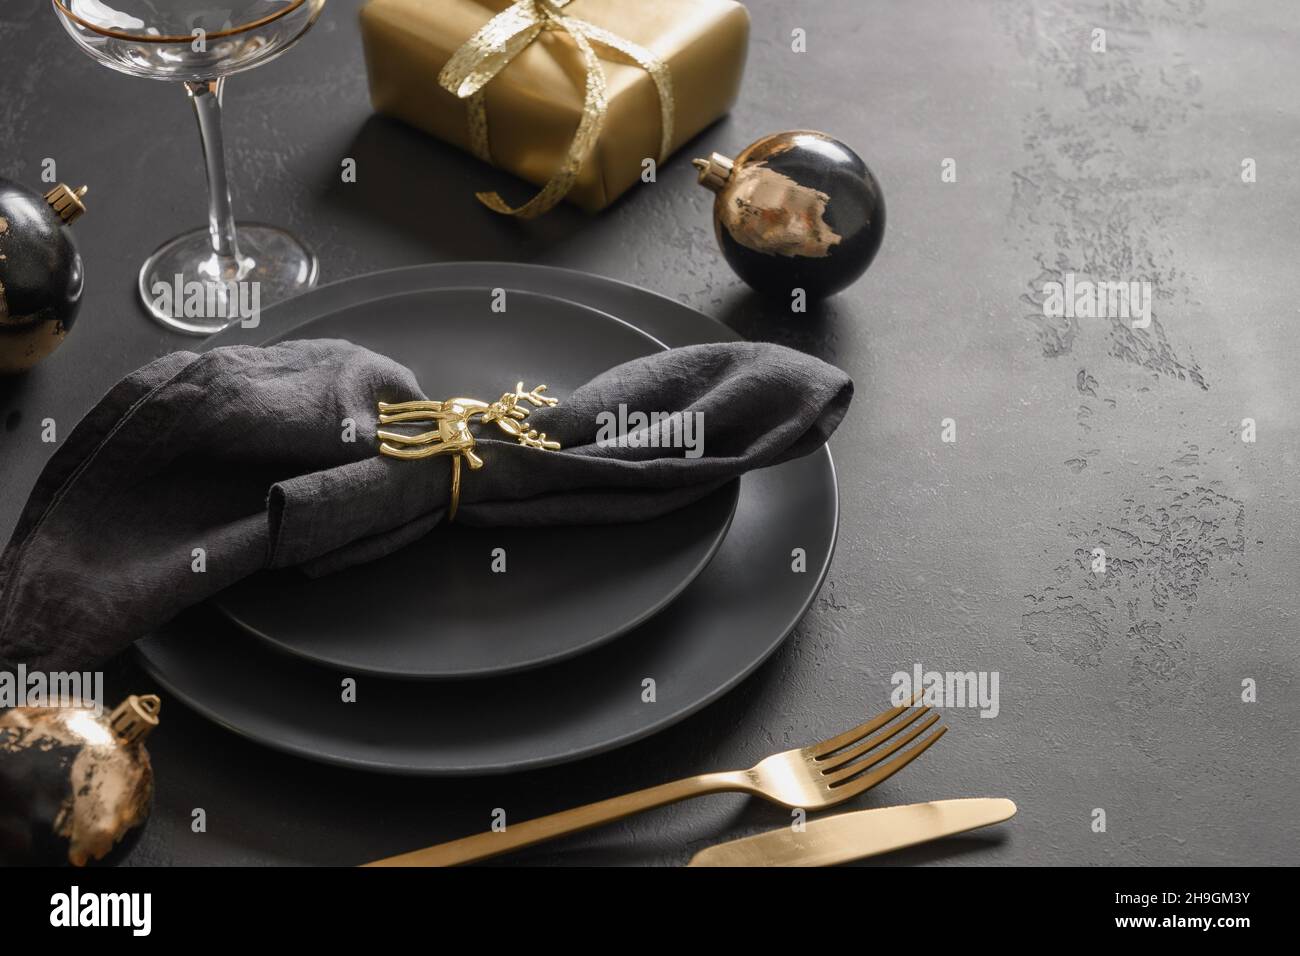 Ajuste de mesa de Navidad con platos negros oscuros, anillo de